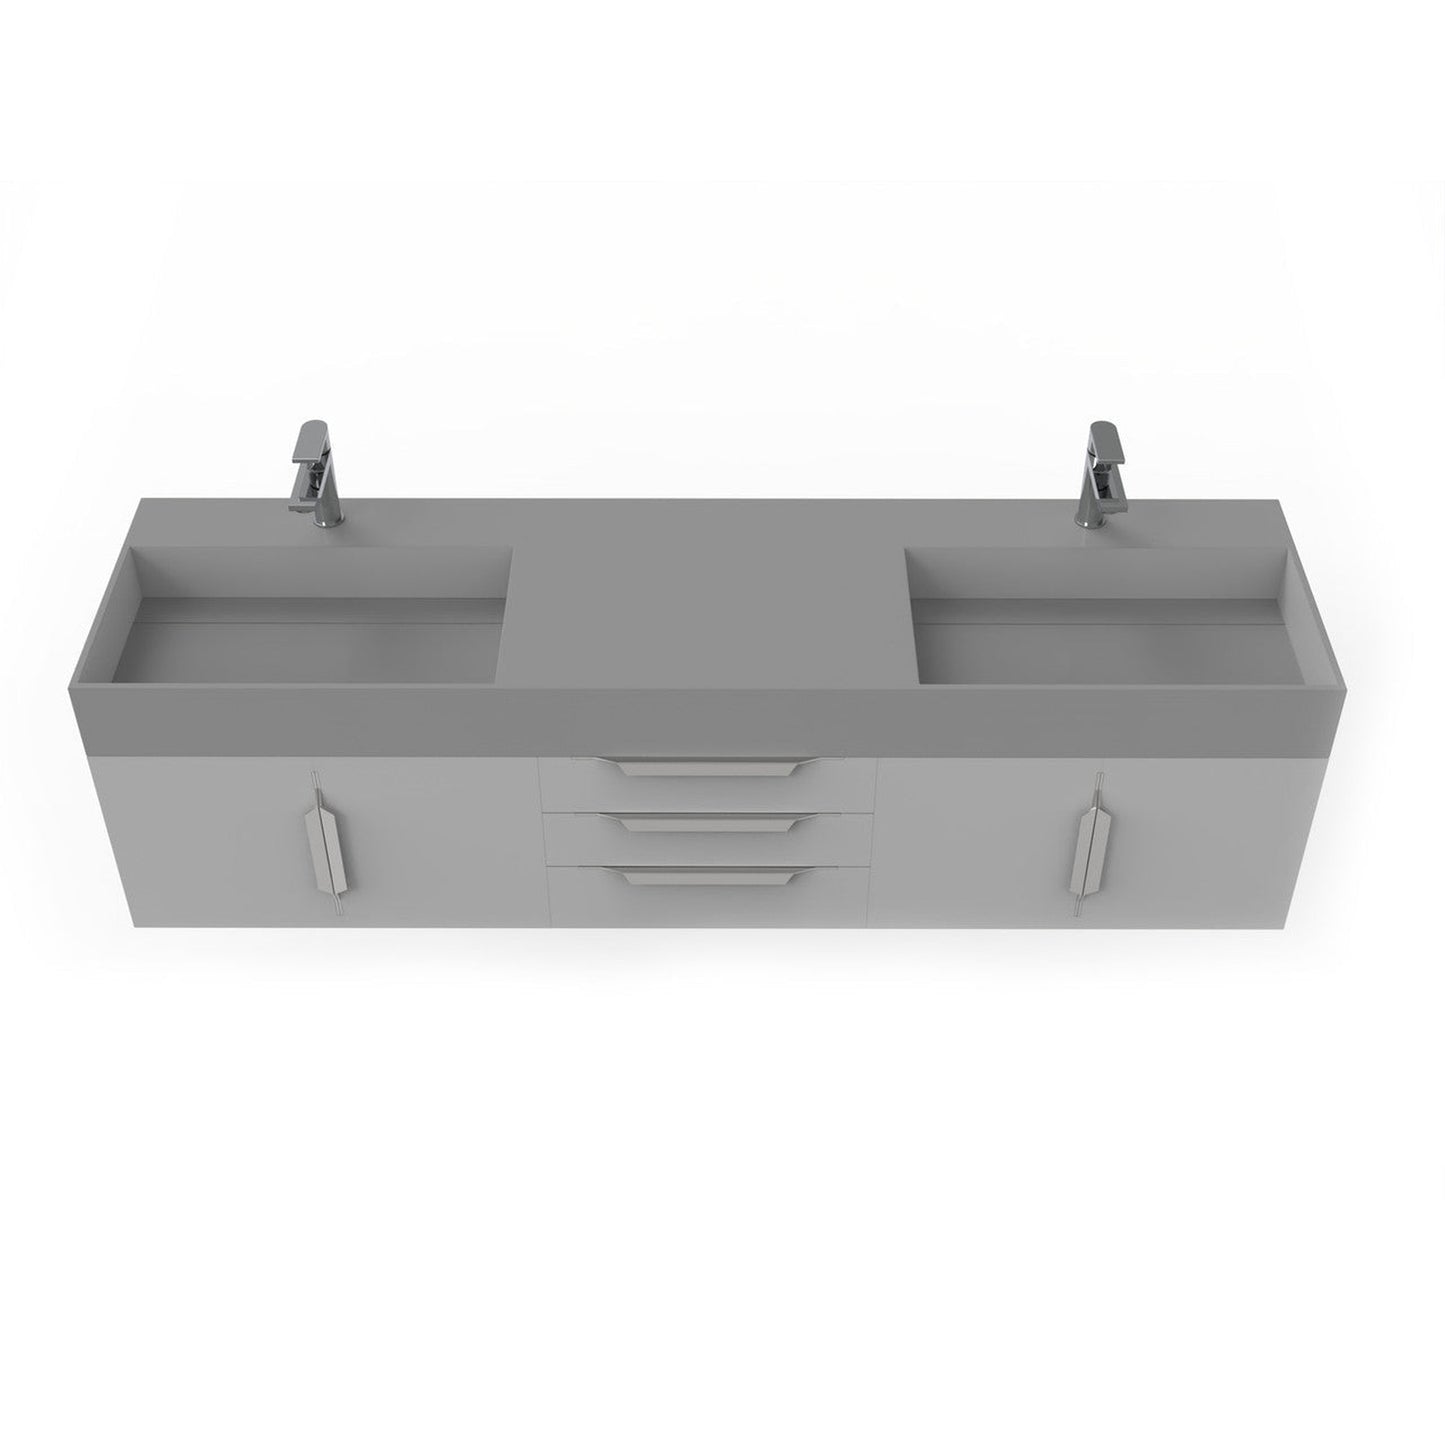 Castello USA Amazon 72" Gray Double Vanity Set With Gray Top and Chrome Handles